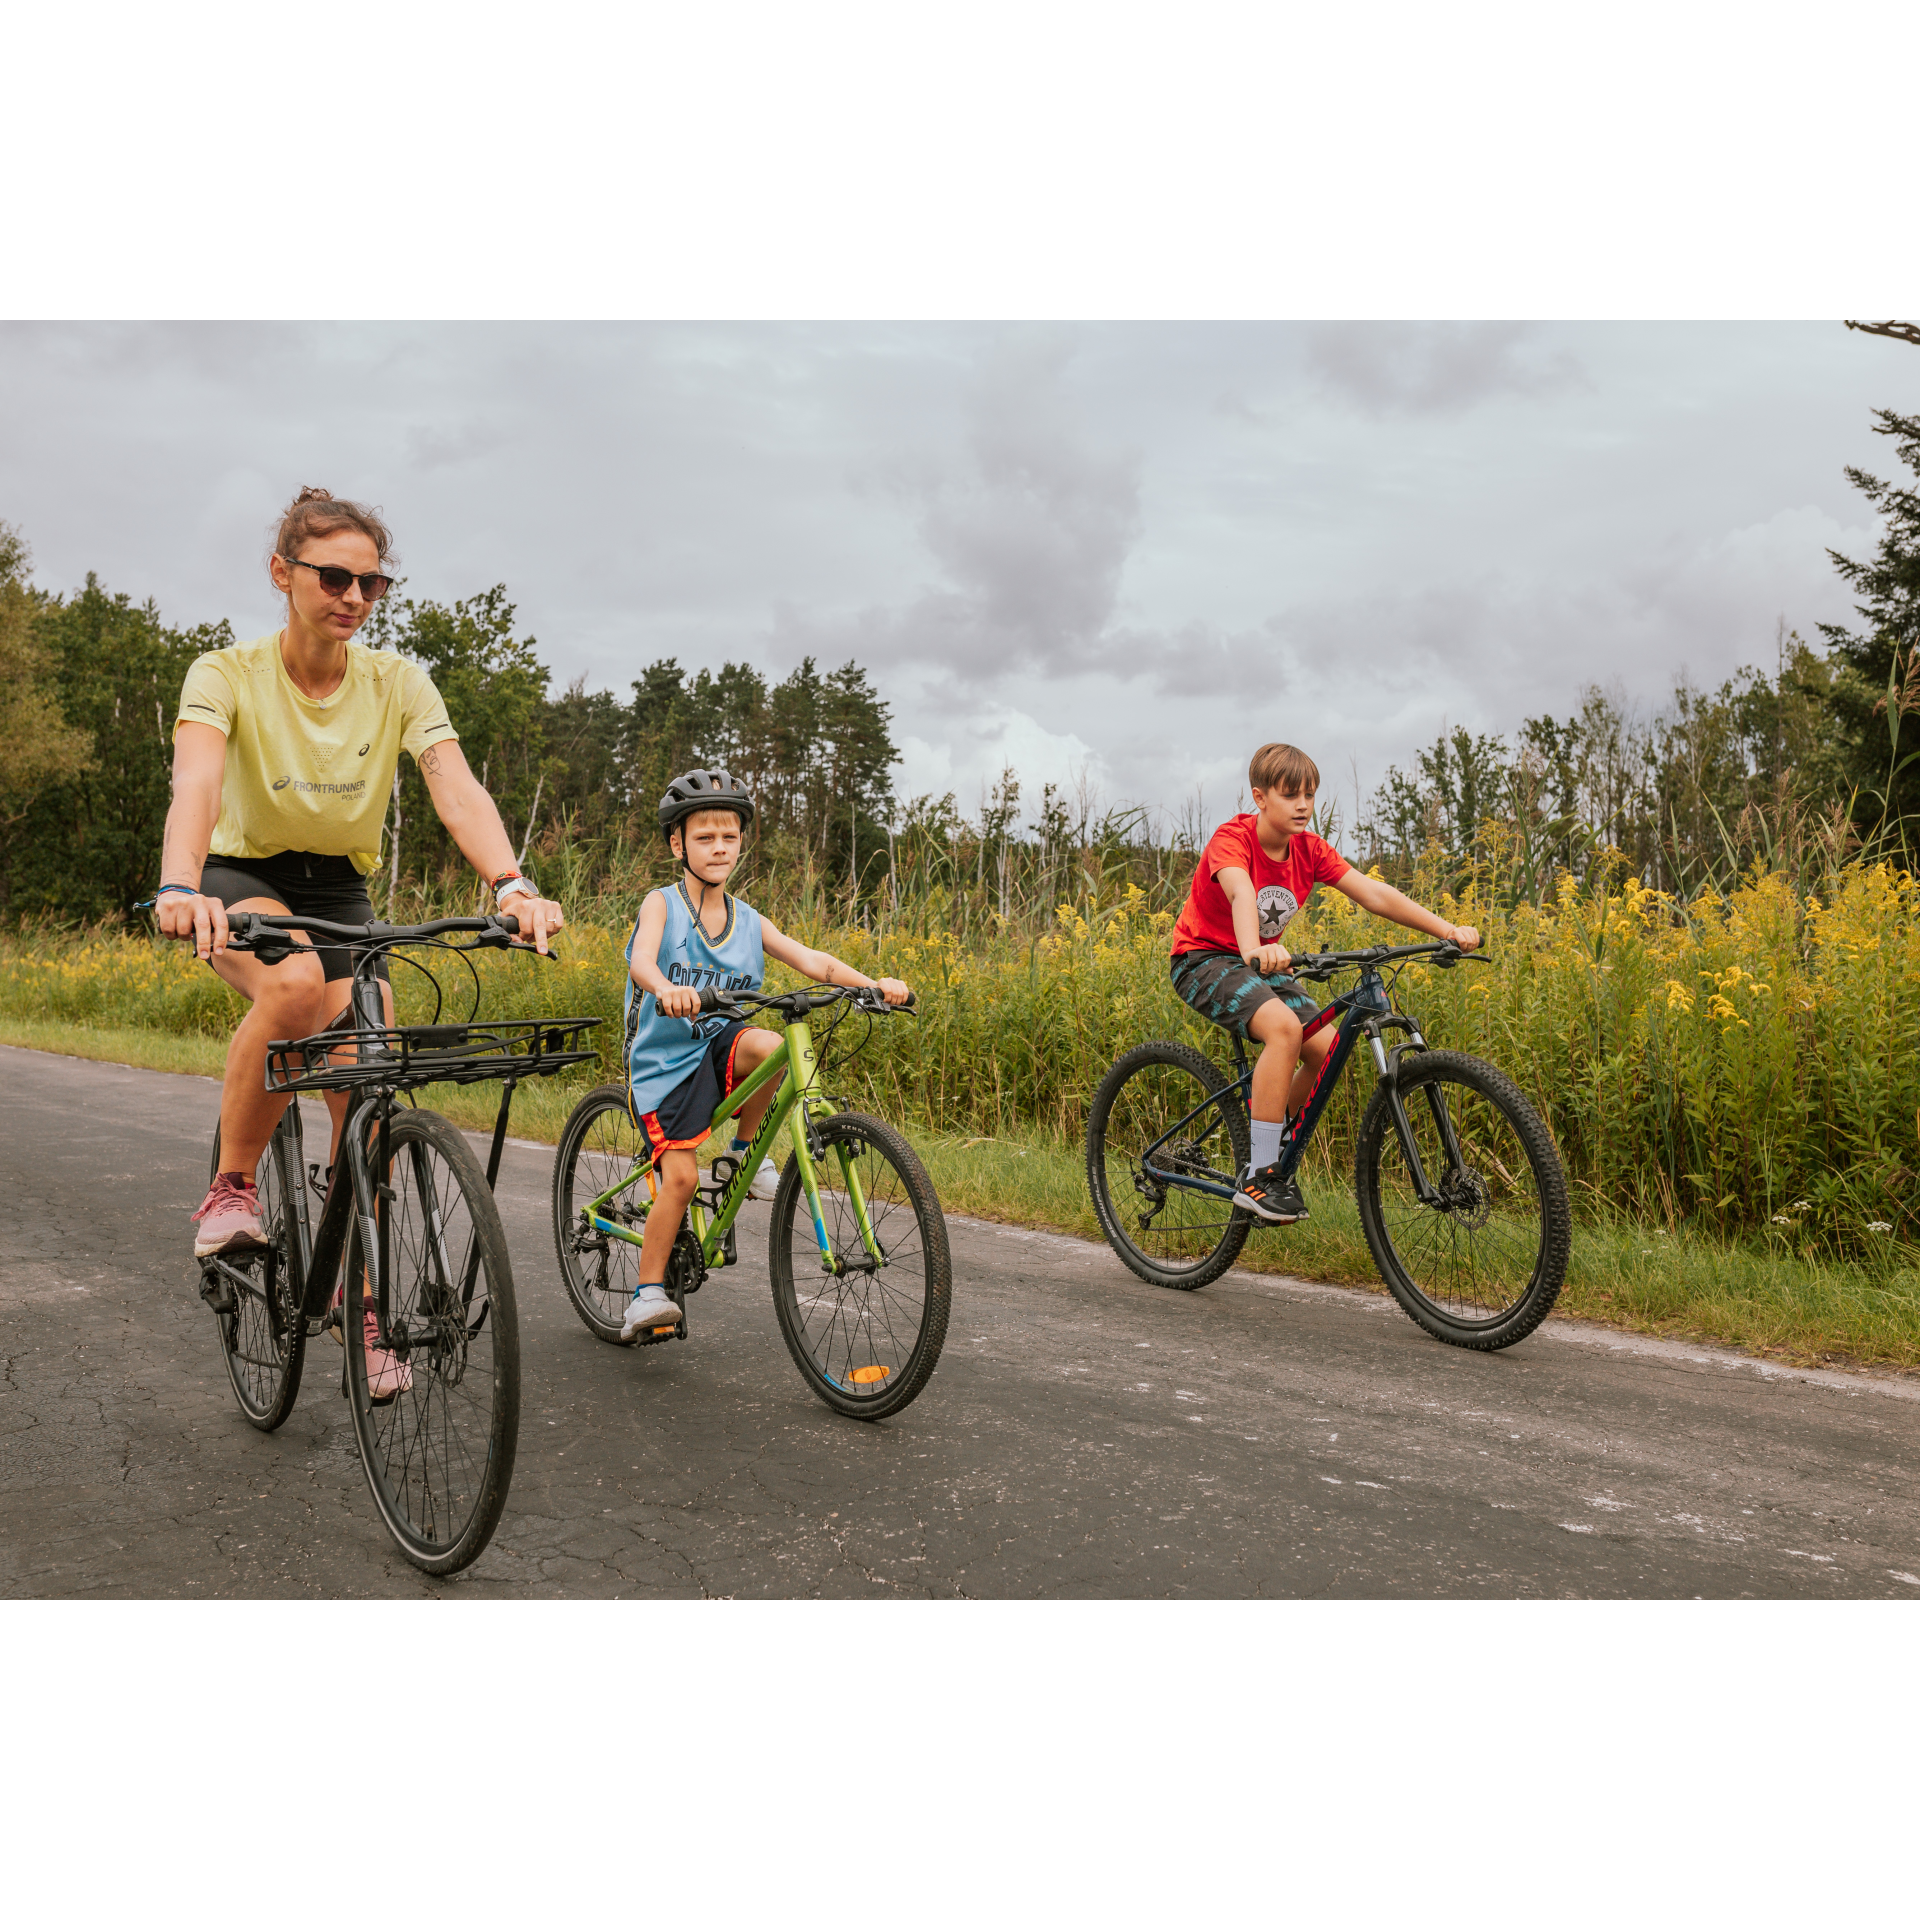 Cyclist with children